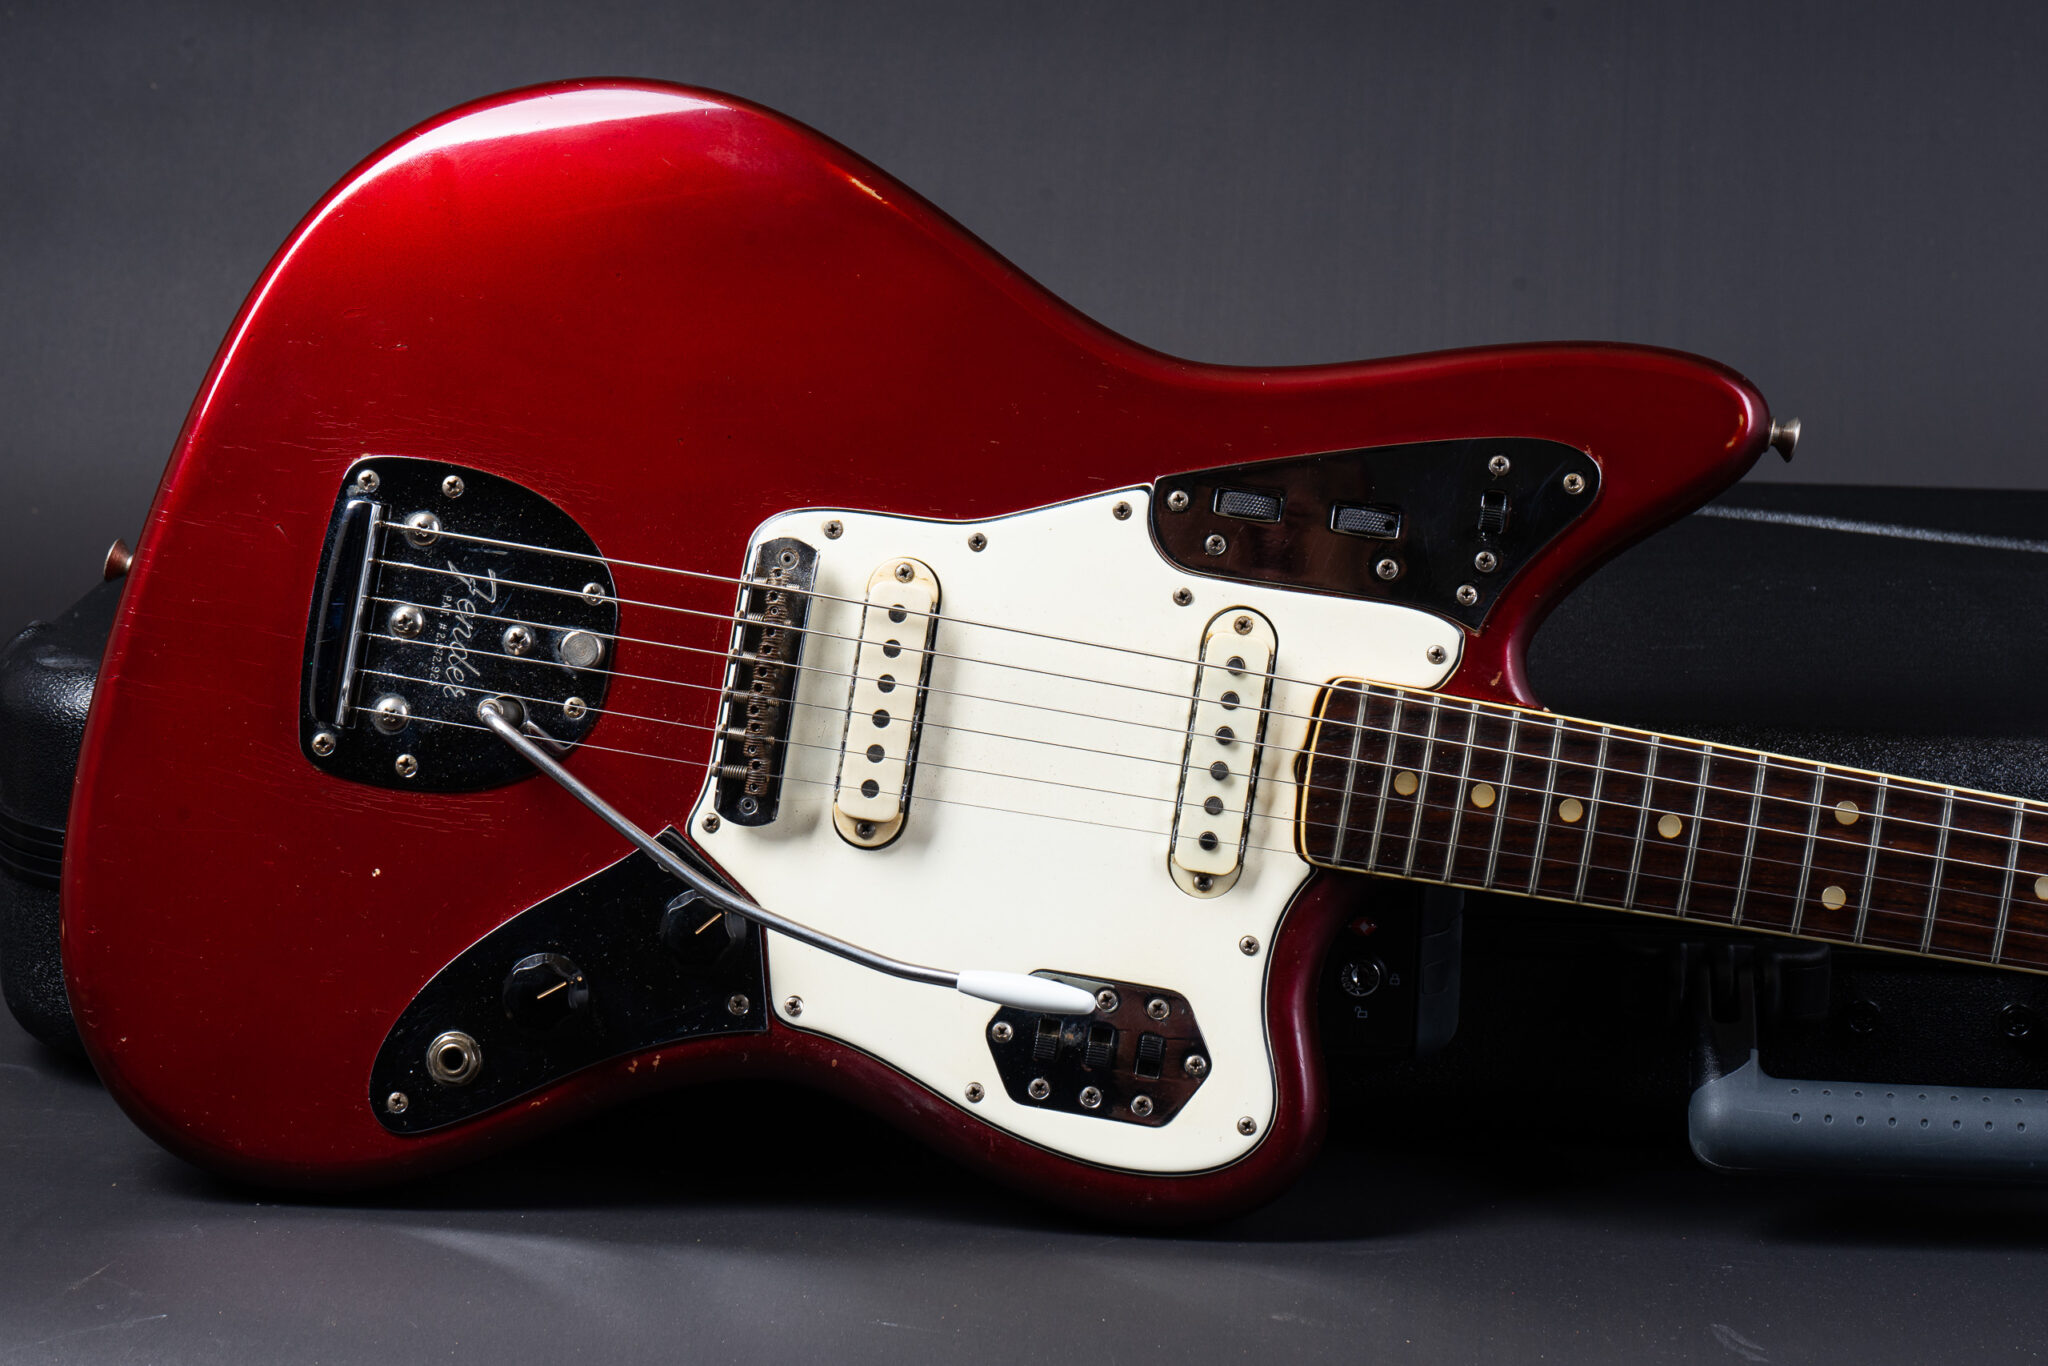 https://guitarpoint.de/app/uploads/products/1965-fender-jaguar-candy-apple-red/1965-Fender-Jaguar-CAR-g-1-2048x1366.jpg